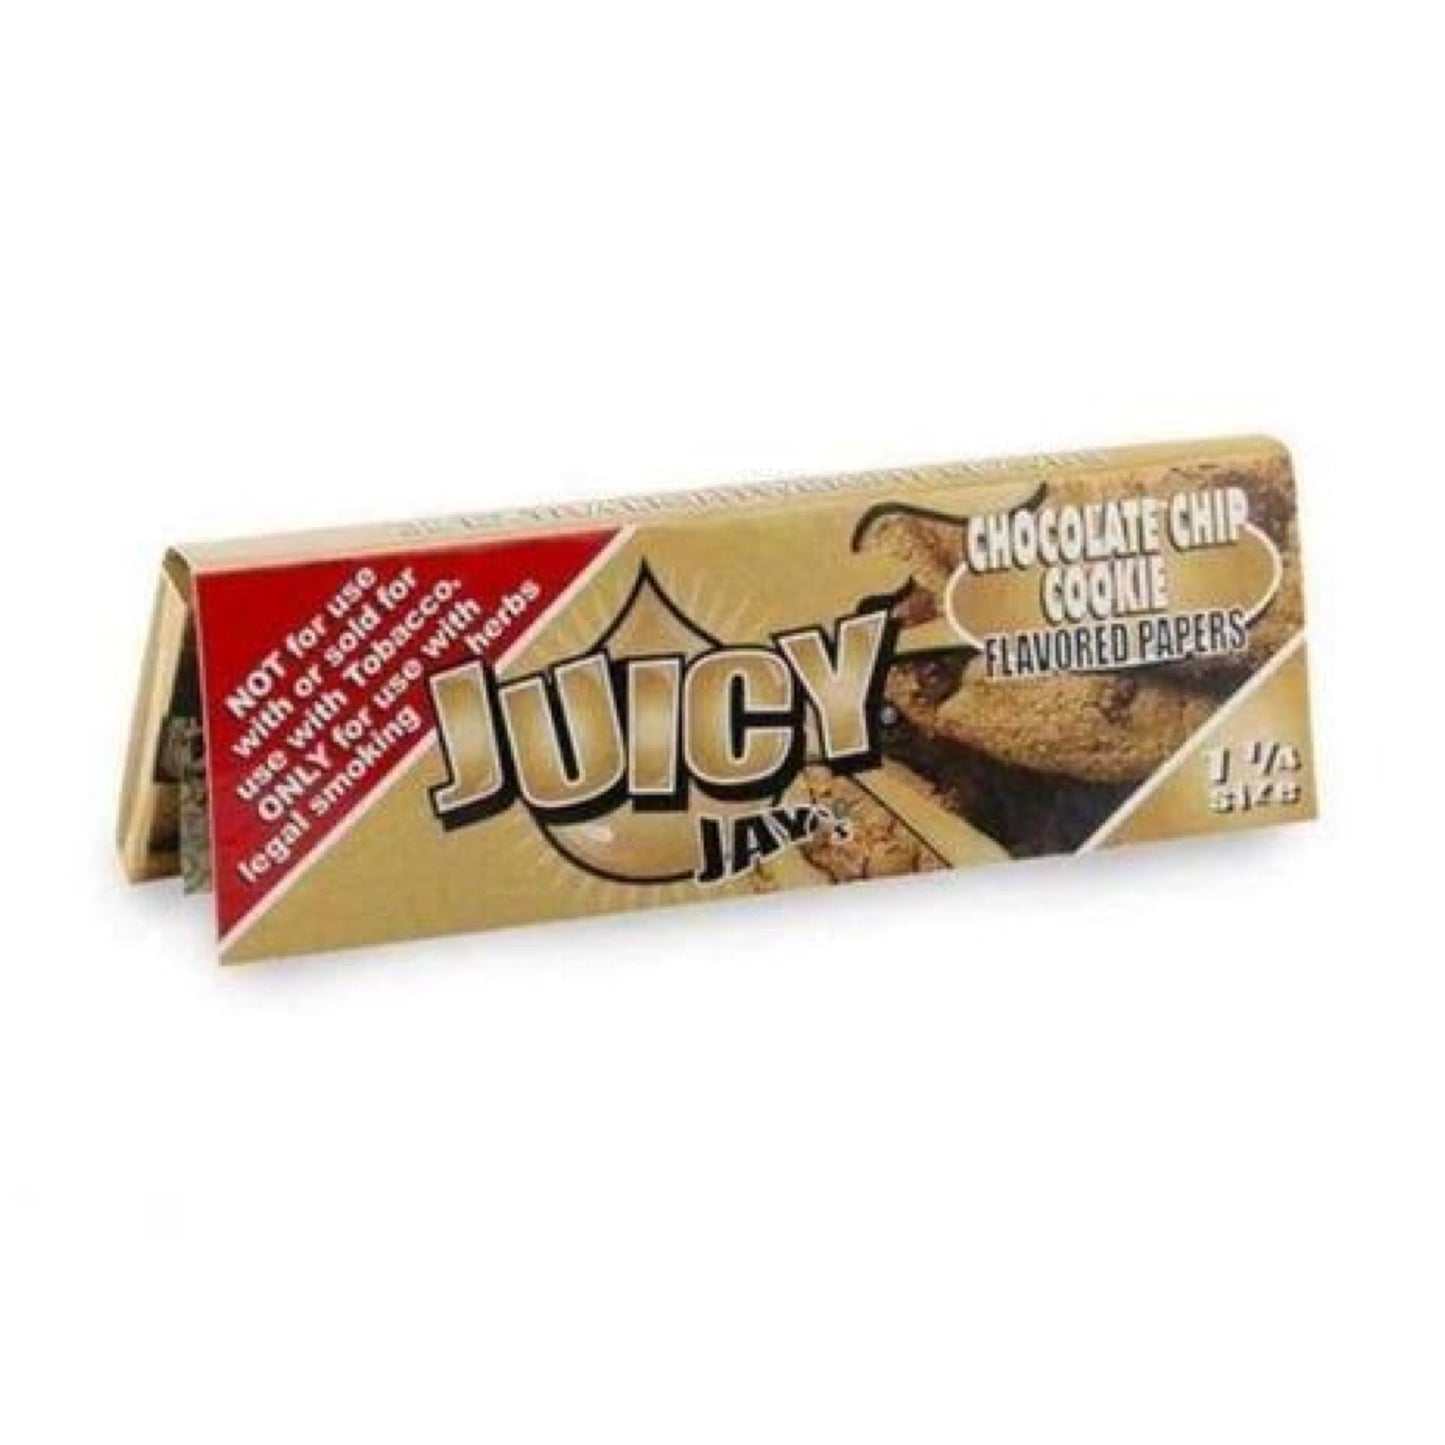 Juicy Jayâ€™s 1.25" Flavored Rolling Papers